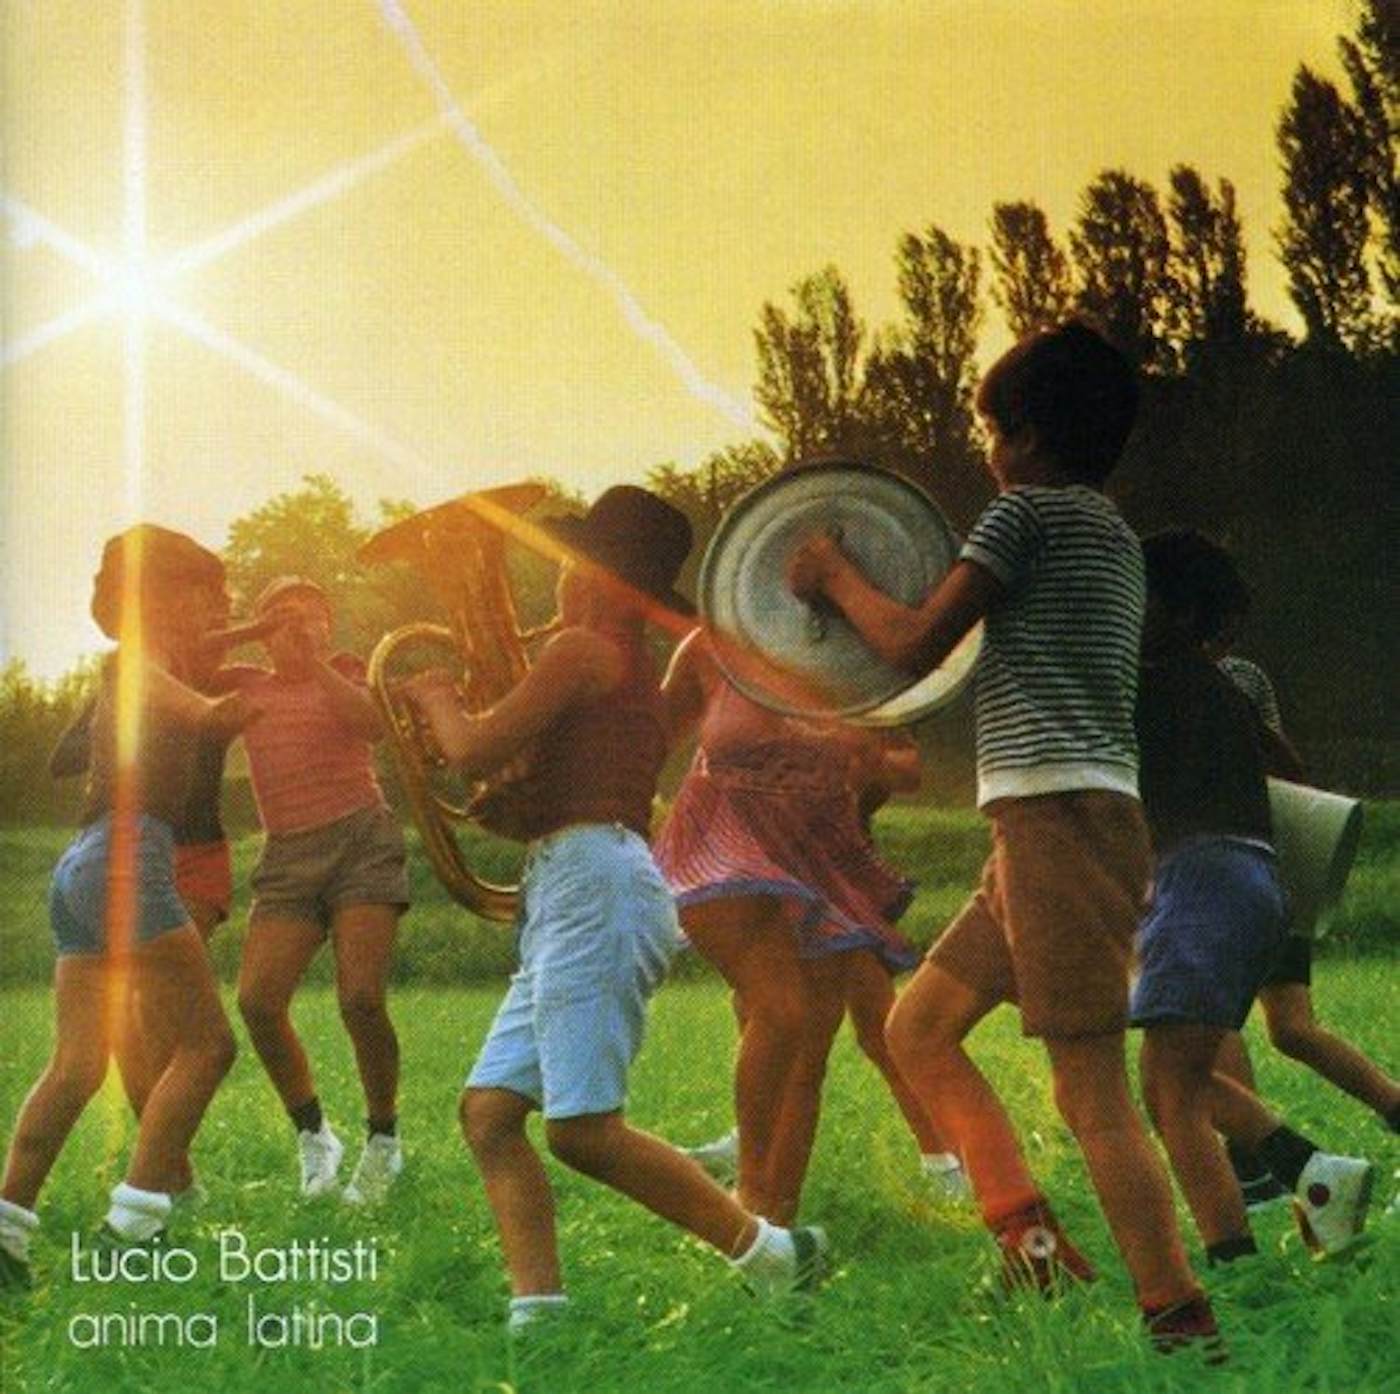 Lucio Battisti Anima latina Vinyl Record